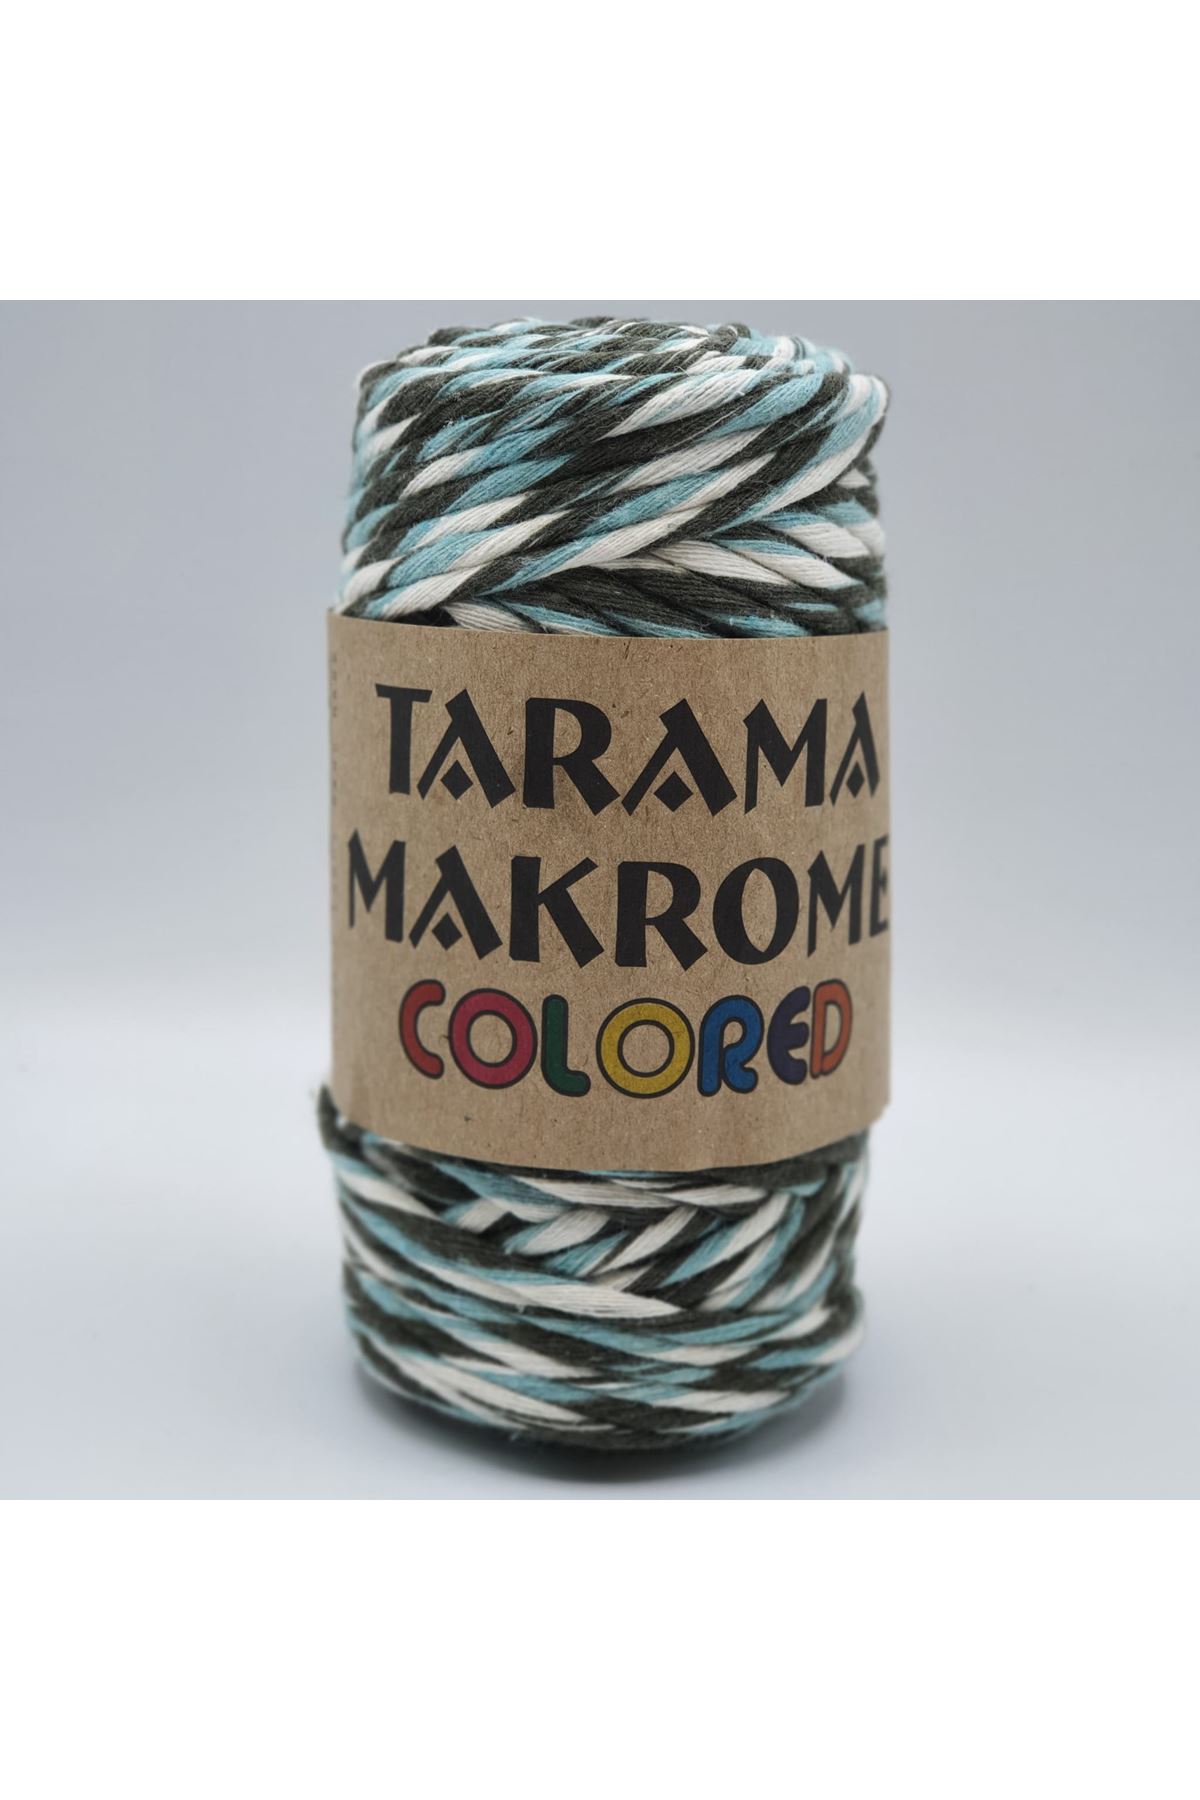 Tarama Makrome Colored 5 mm - 10